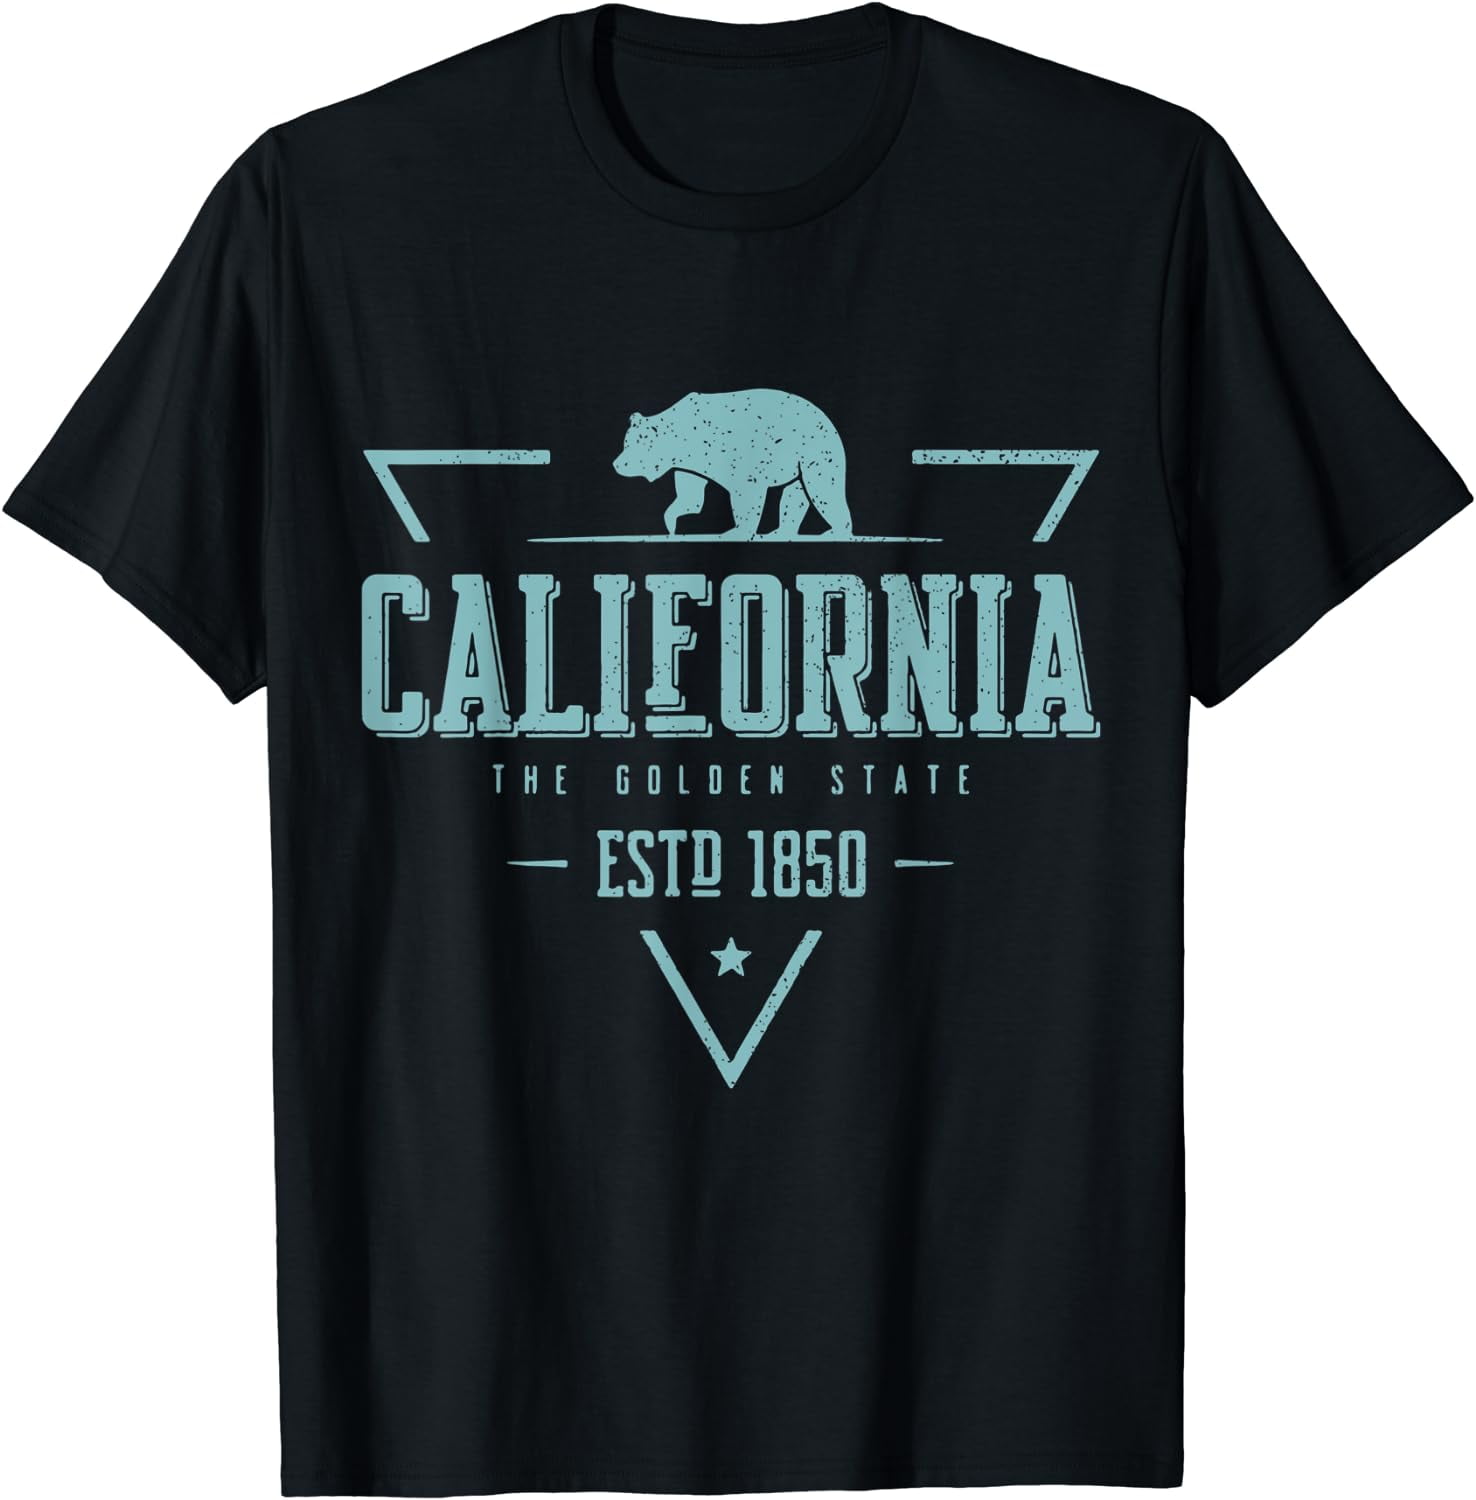 Vintage California The Golden State Logo T-Shirt Black - Walmart.com